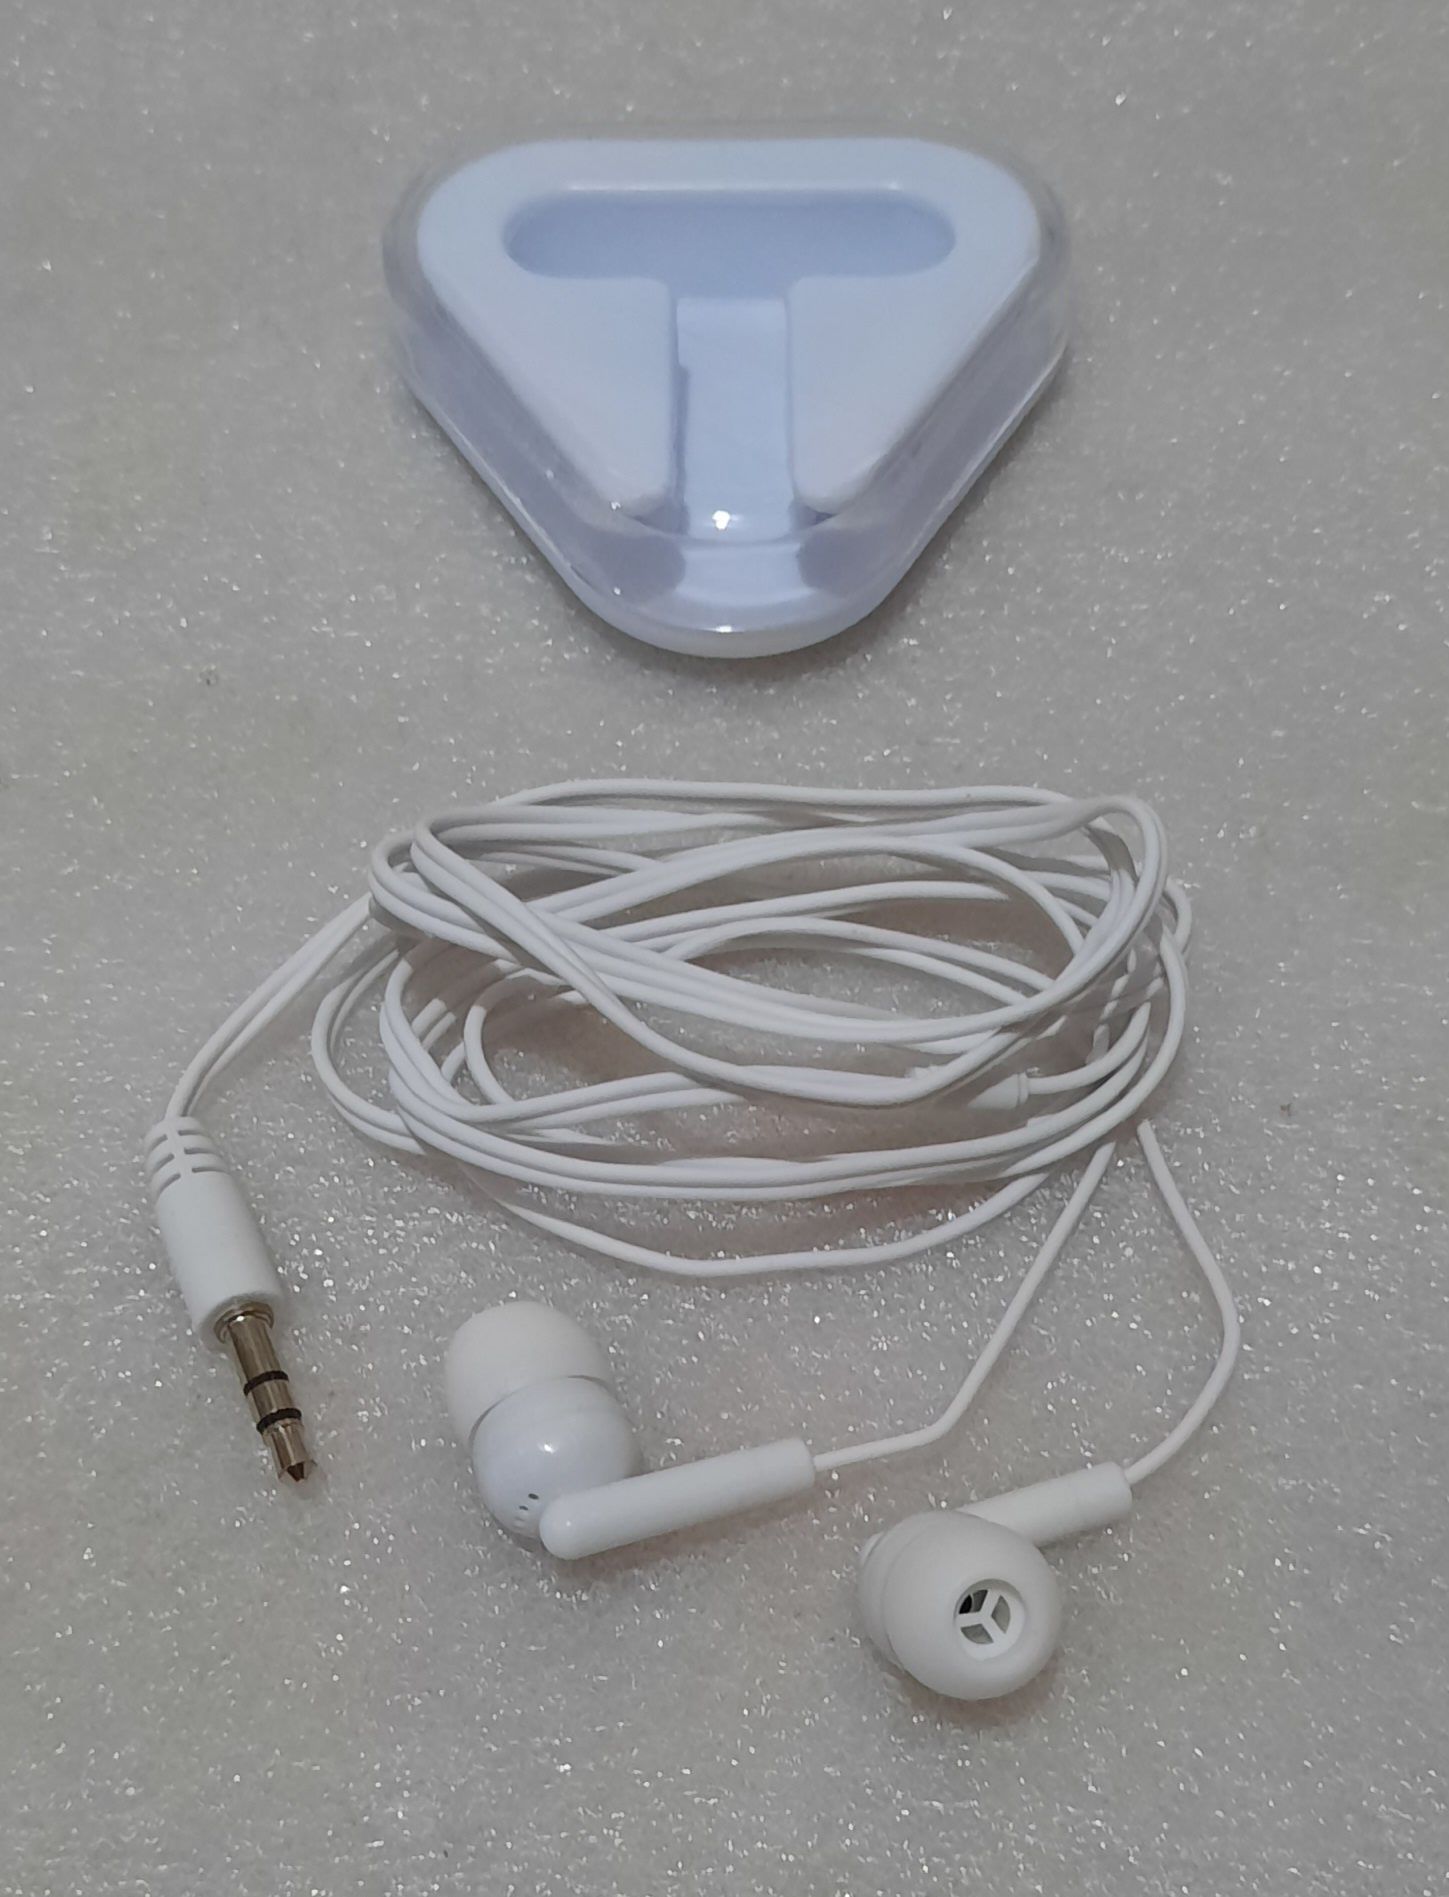 Casti audio stereo In-Ear, ambalate individual in cutie de plastic